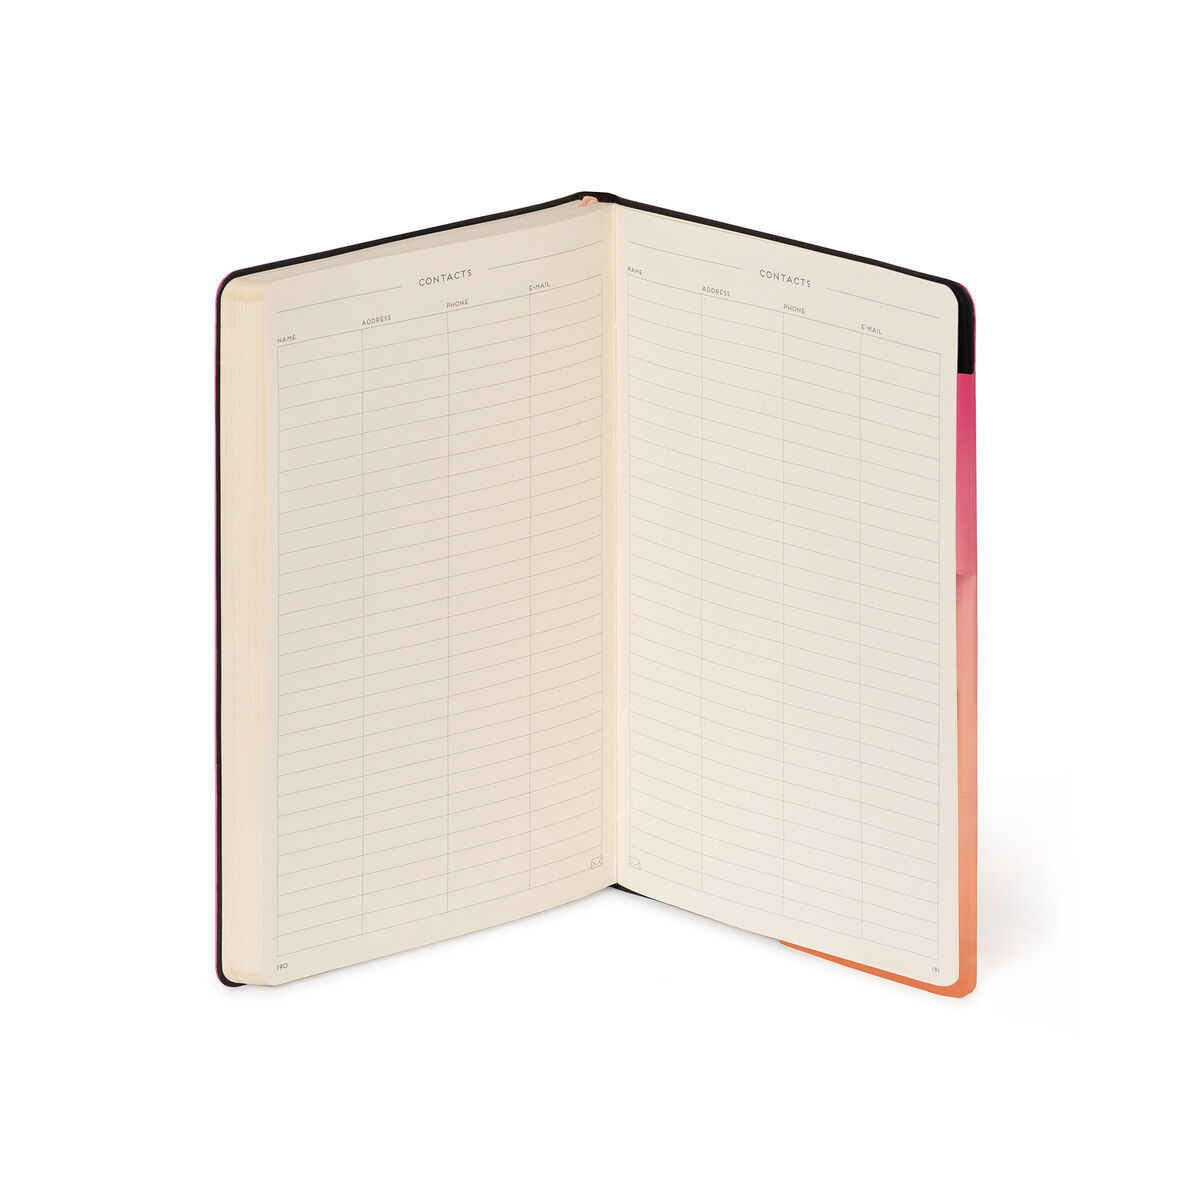 My Notebook - Plain - Medium, , zoo